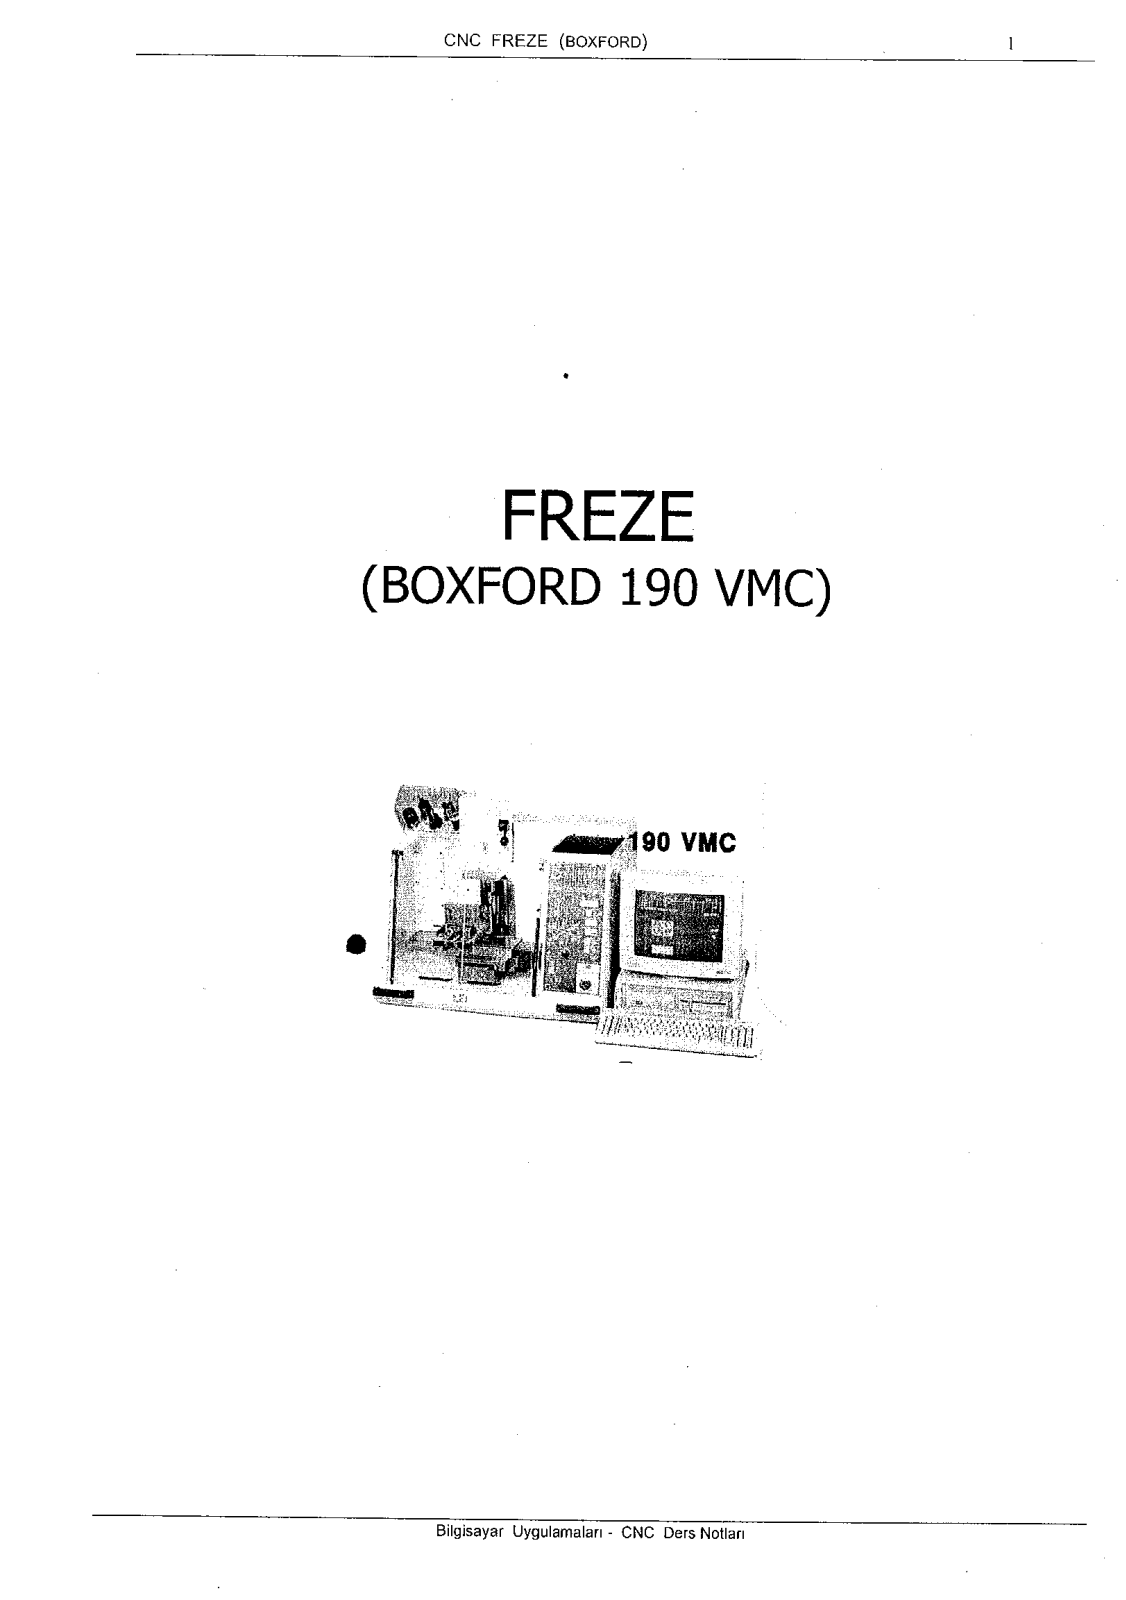 boxford 190 VMC Programming Manual